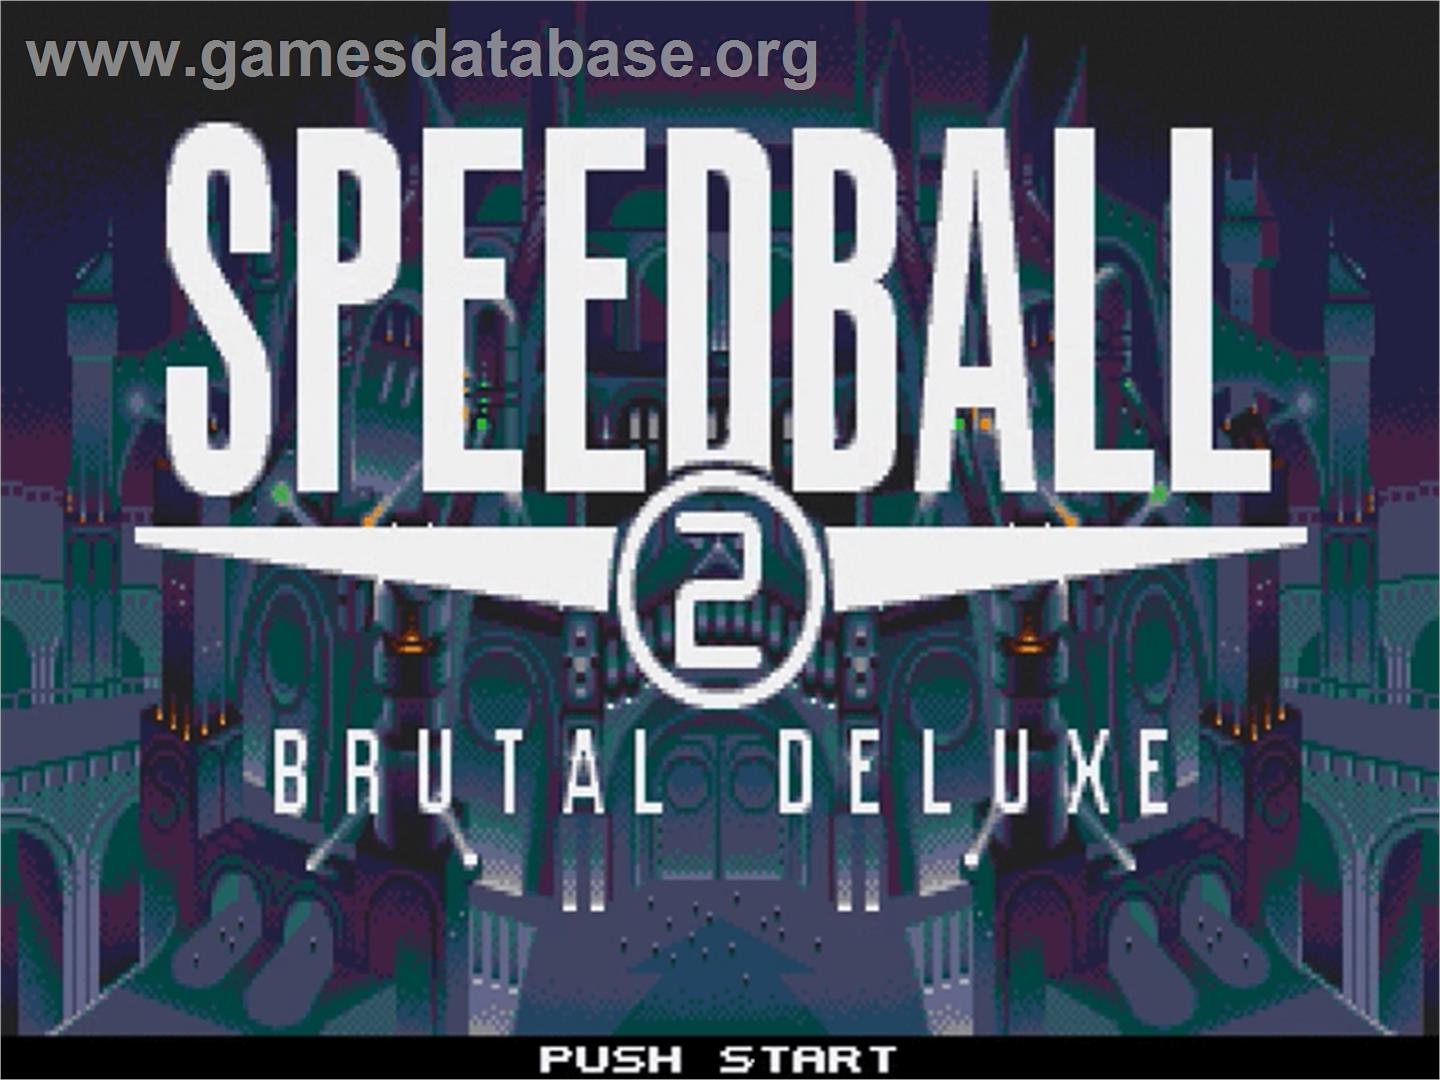 Speedball 2: Brutal Deluxe - Sega Genesis - Artwork - Title Screen